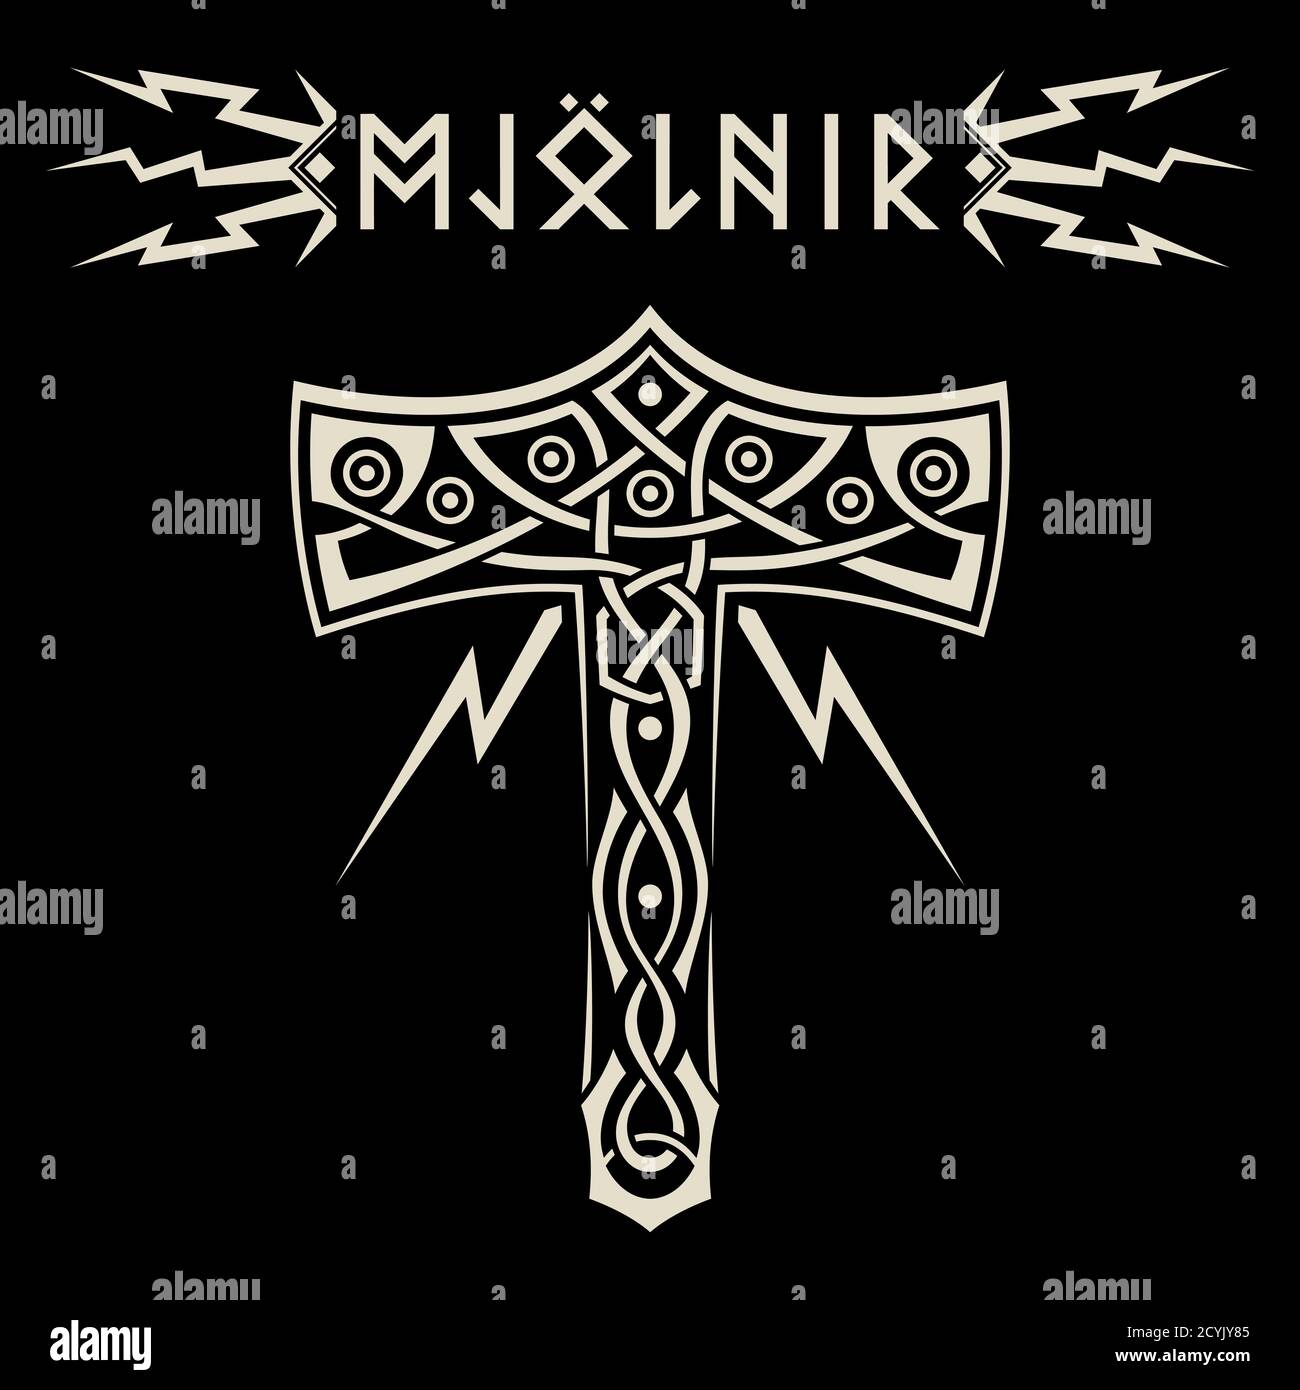 Scandinavian design. Thors hammer - Mjolnir and Norse runes Stock Vector